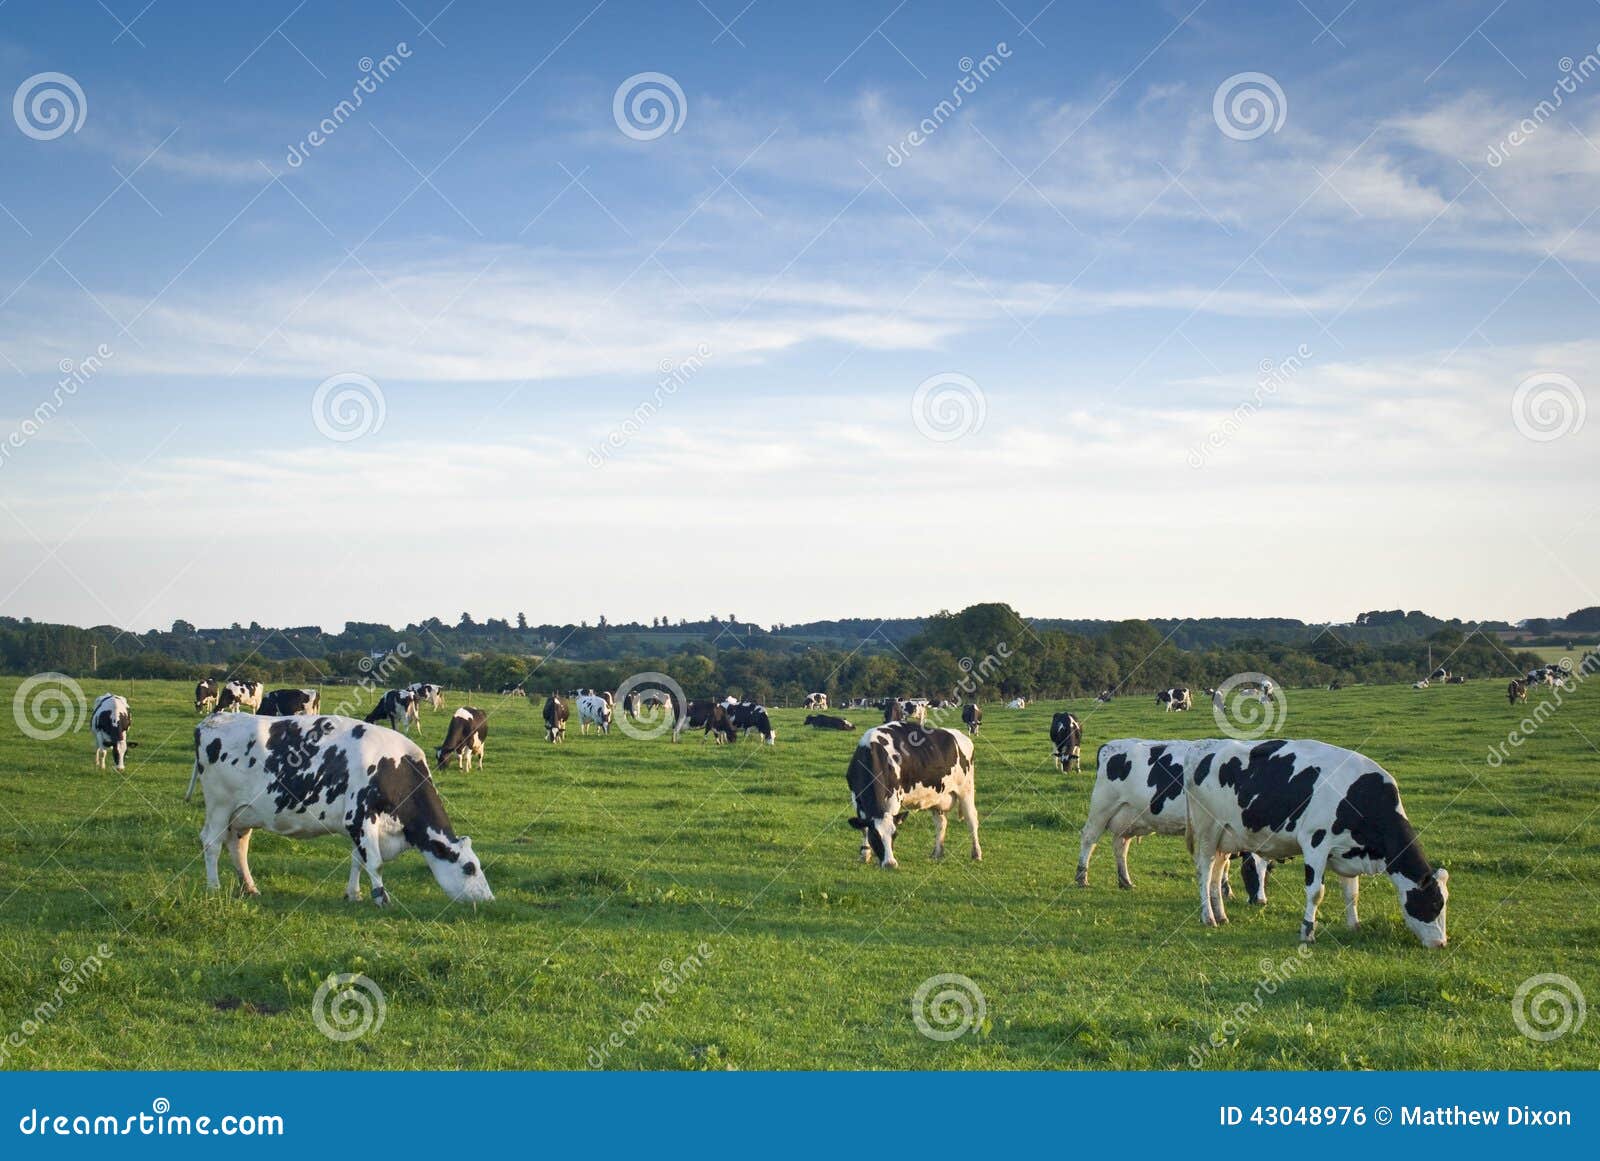 healthy cattle livestock, idyllic rural, uk